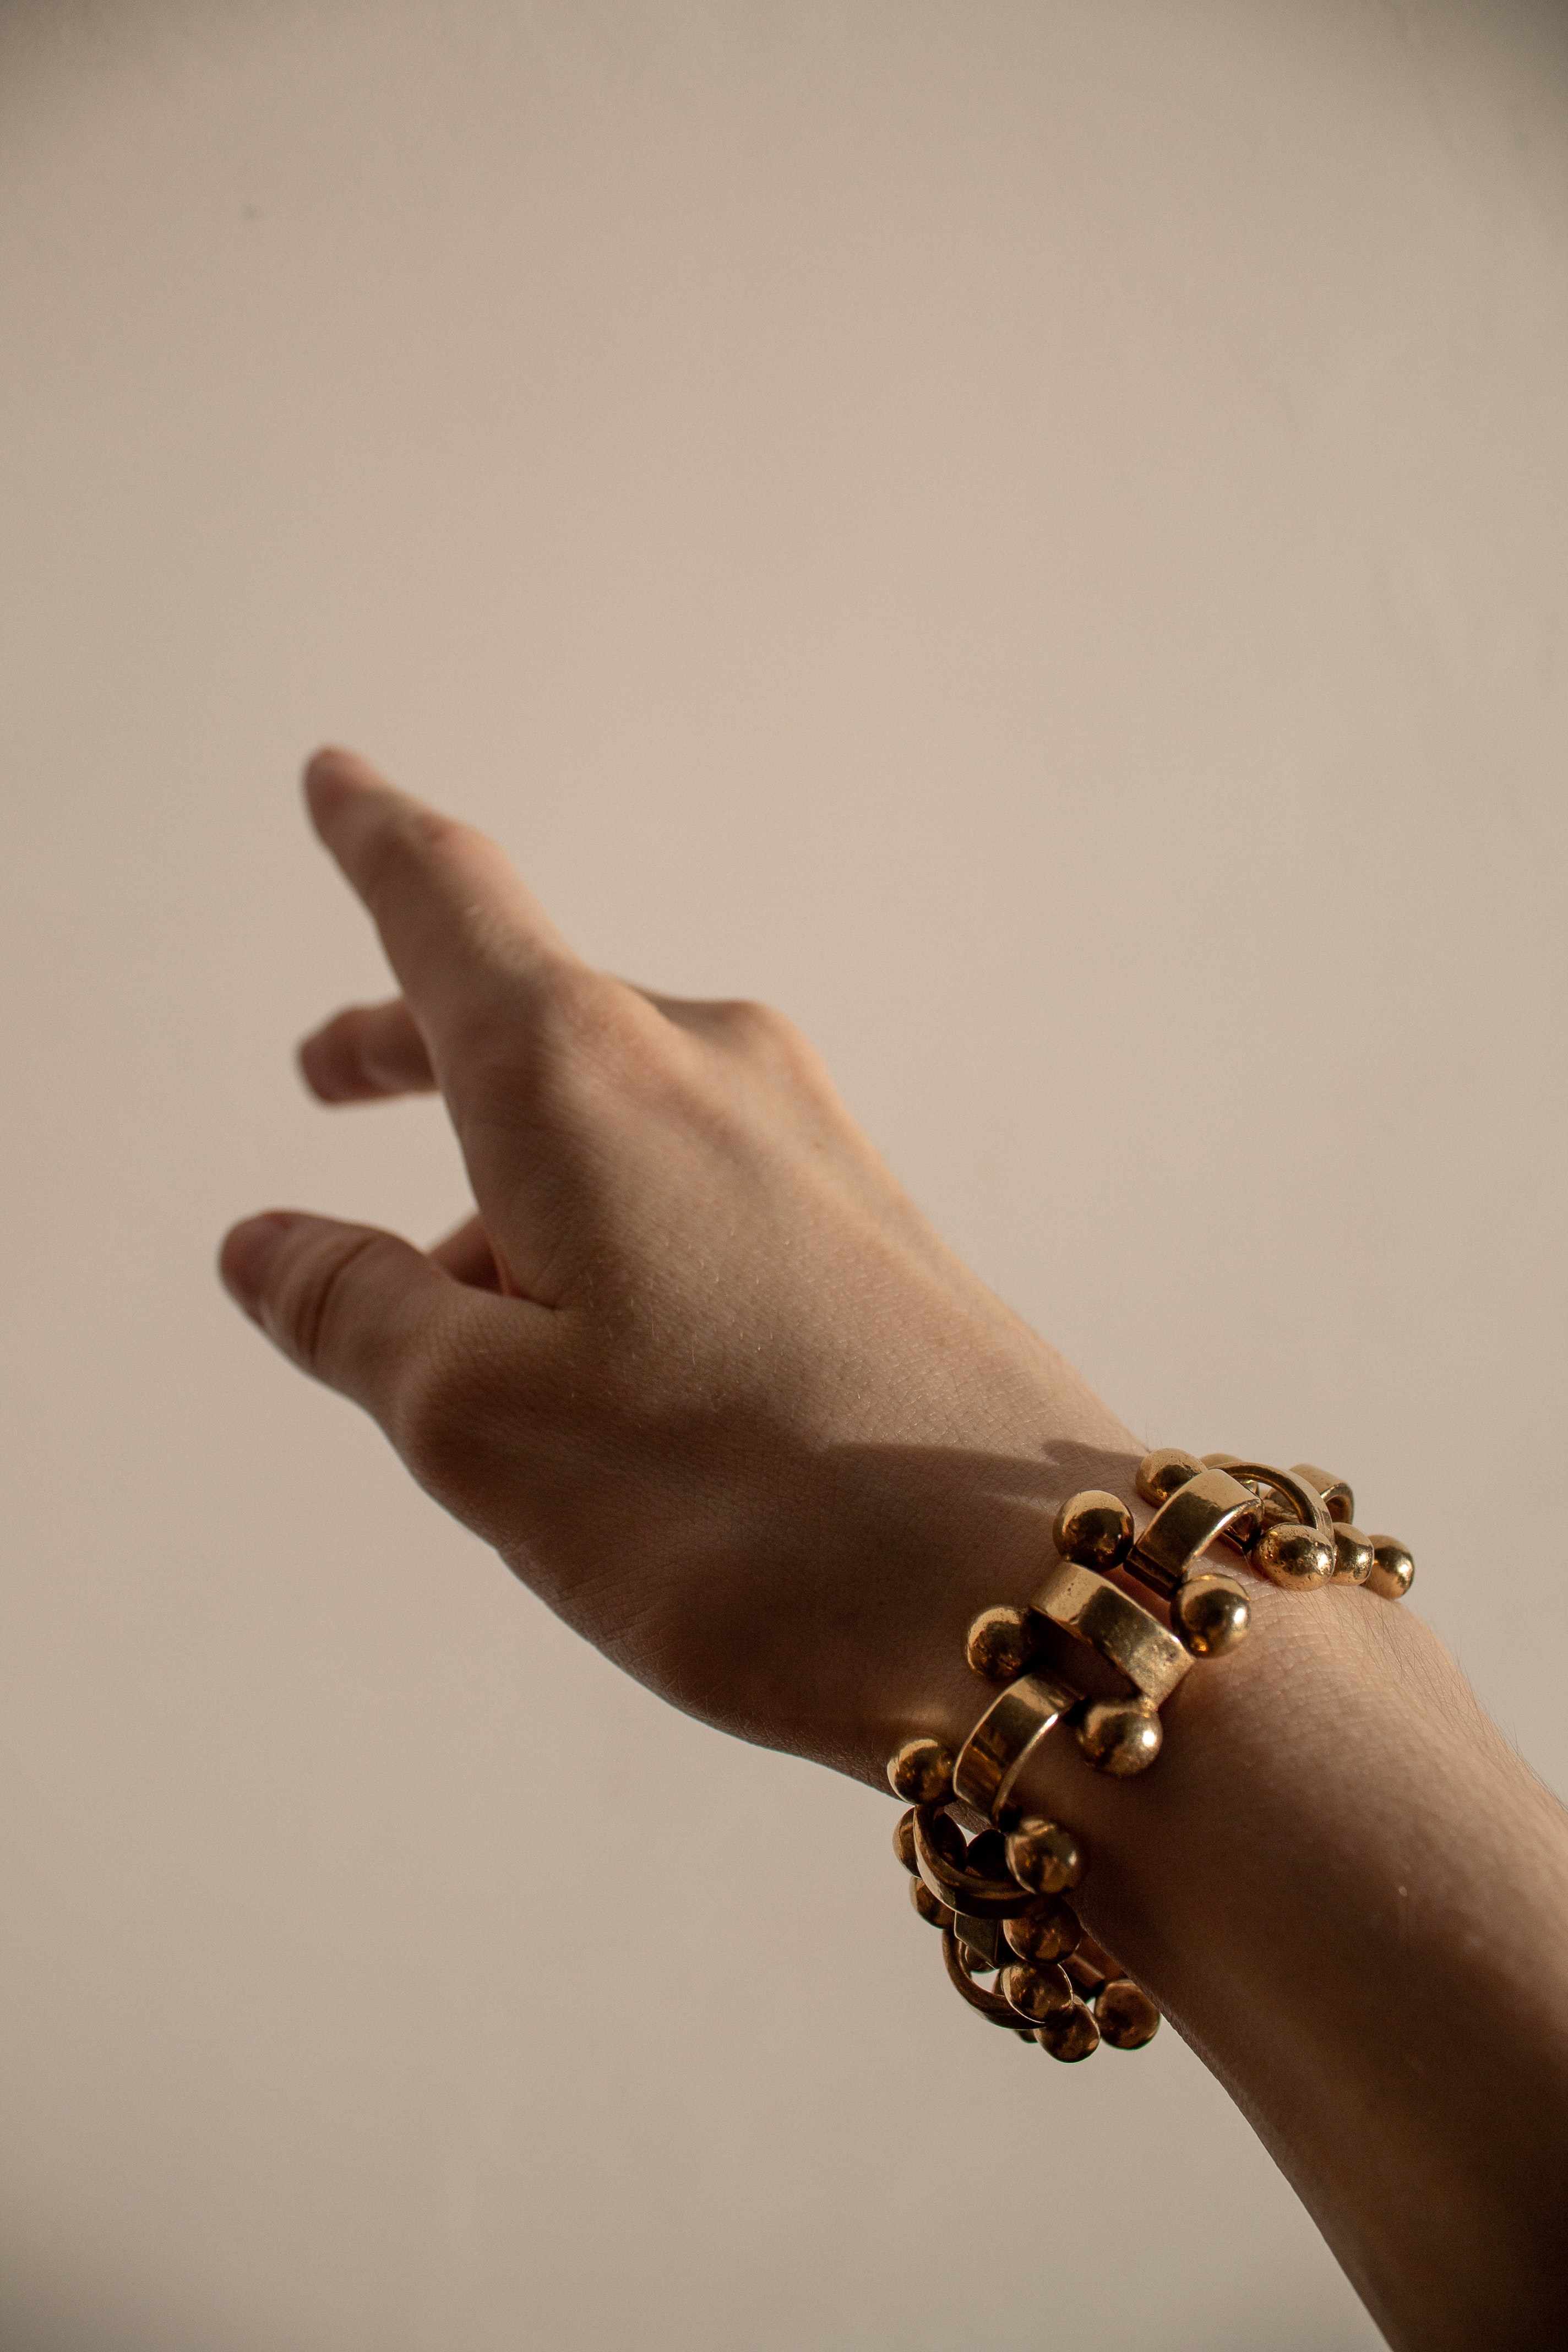 Buy gold bracelets based on lifestyle online